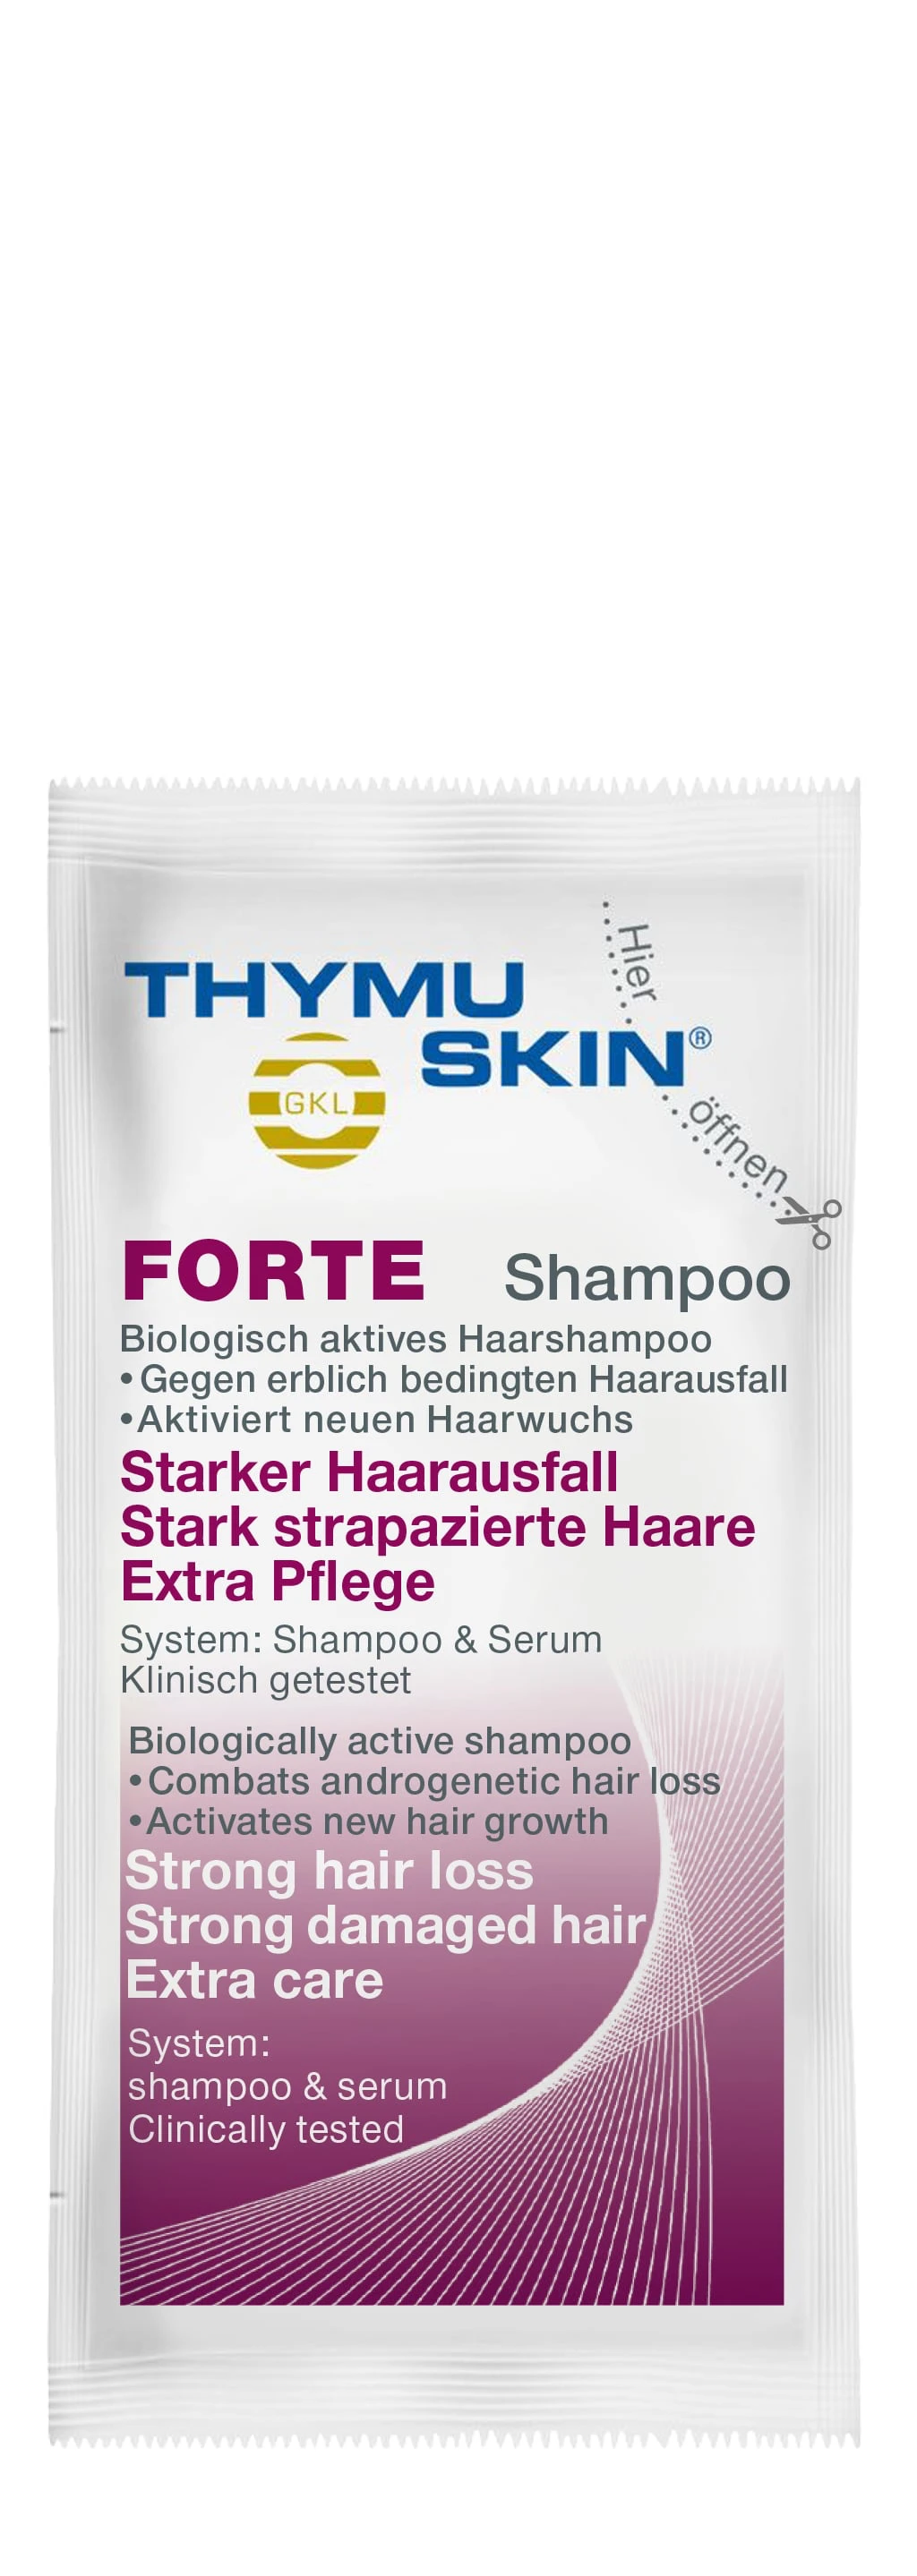 FORTE Shampoo (Sample)